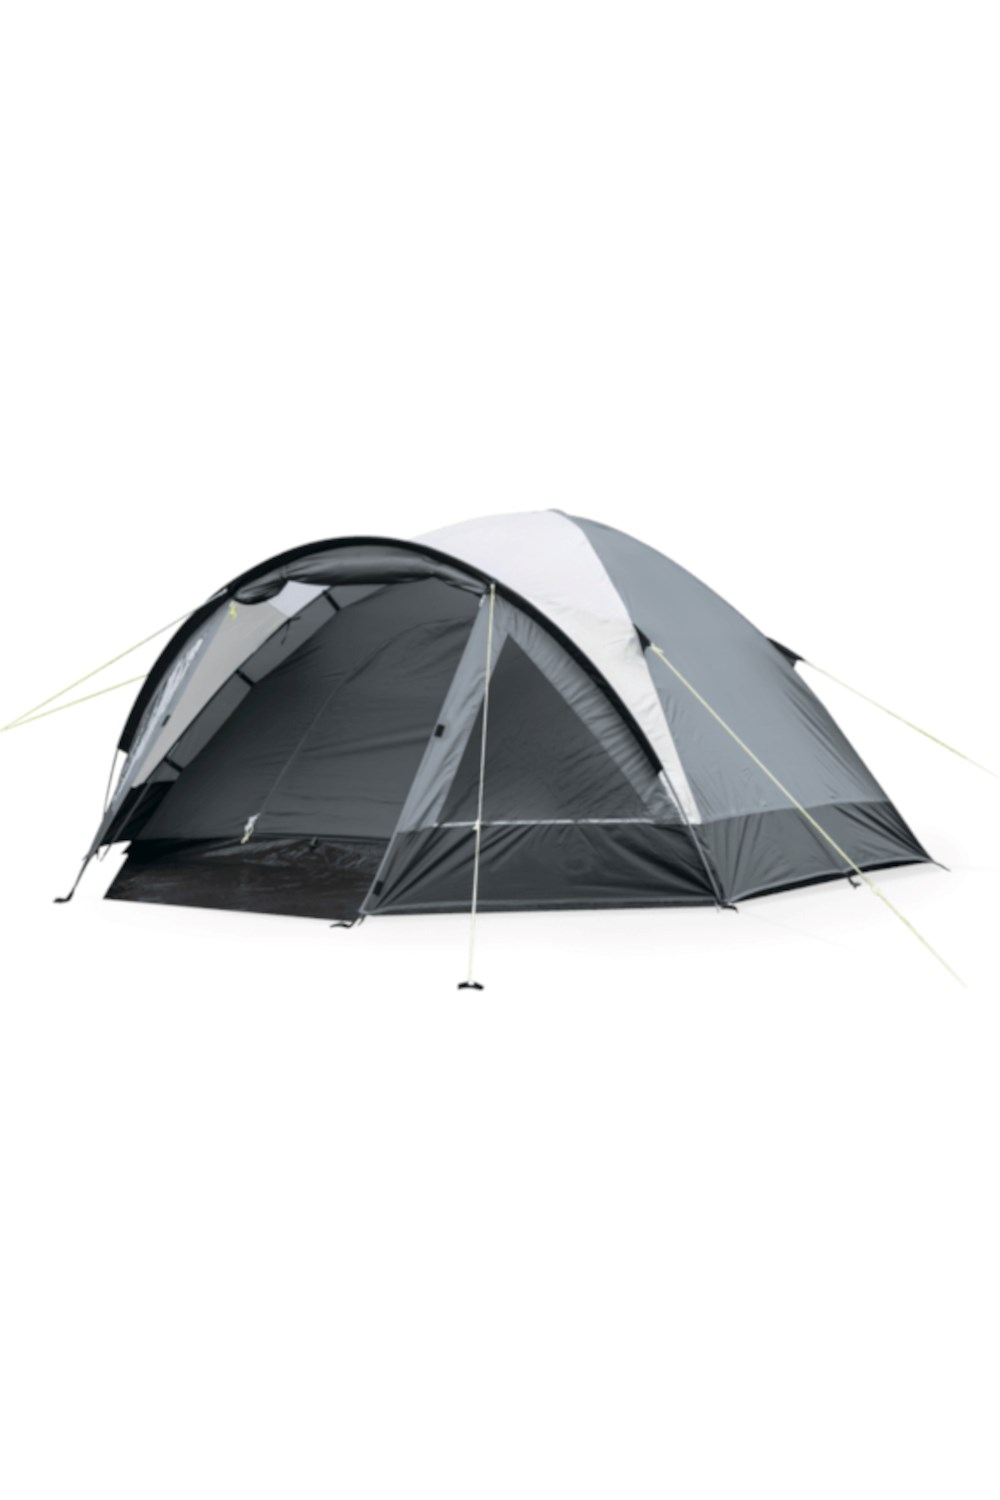 Brighton 4 Man Poled Camping Tent -